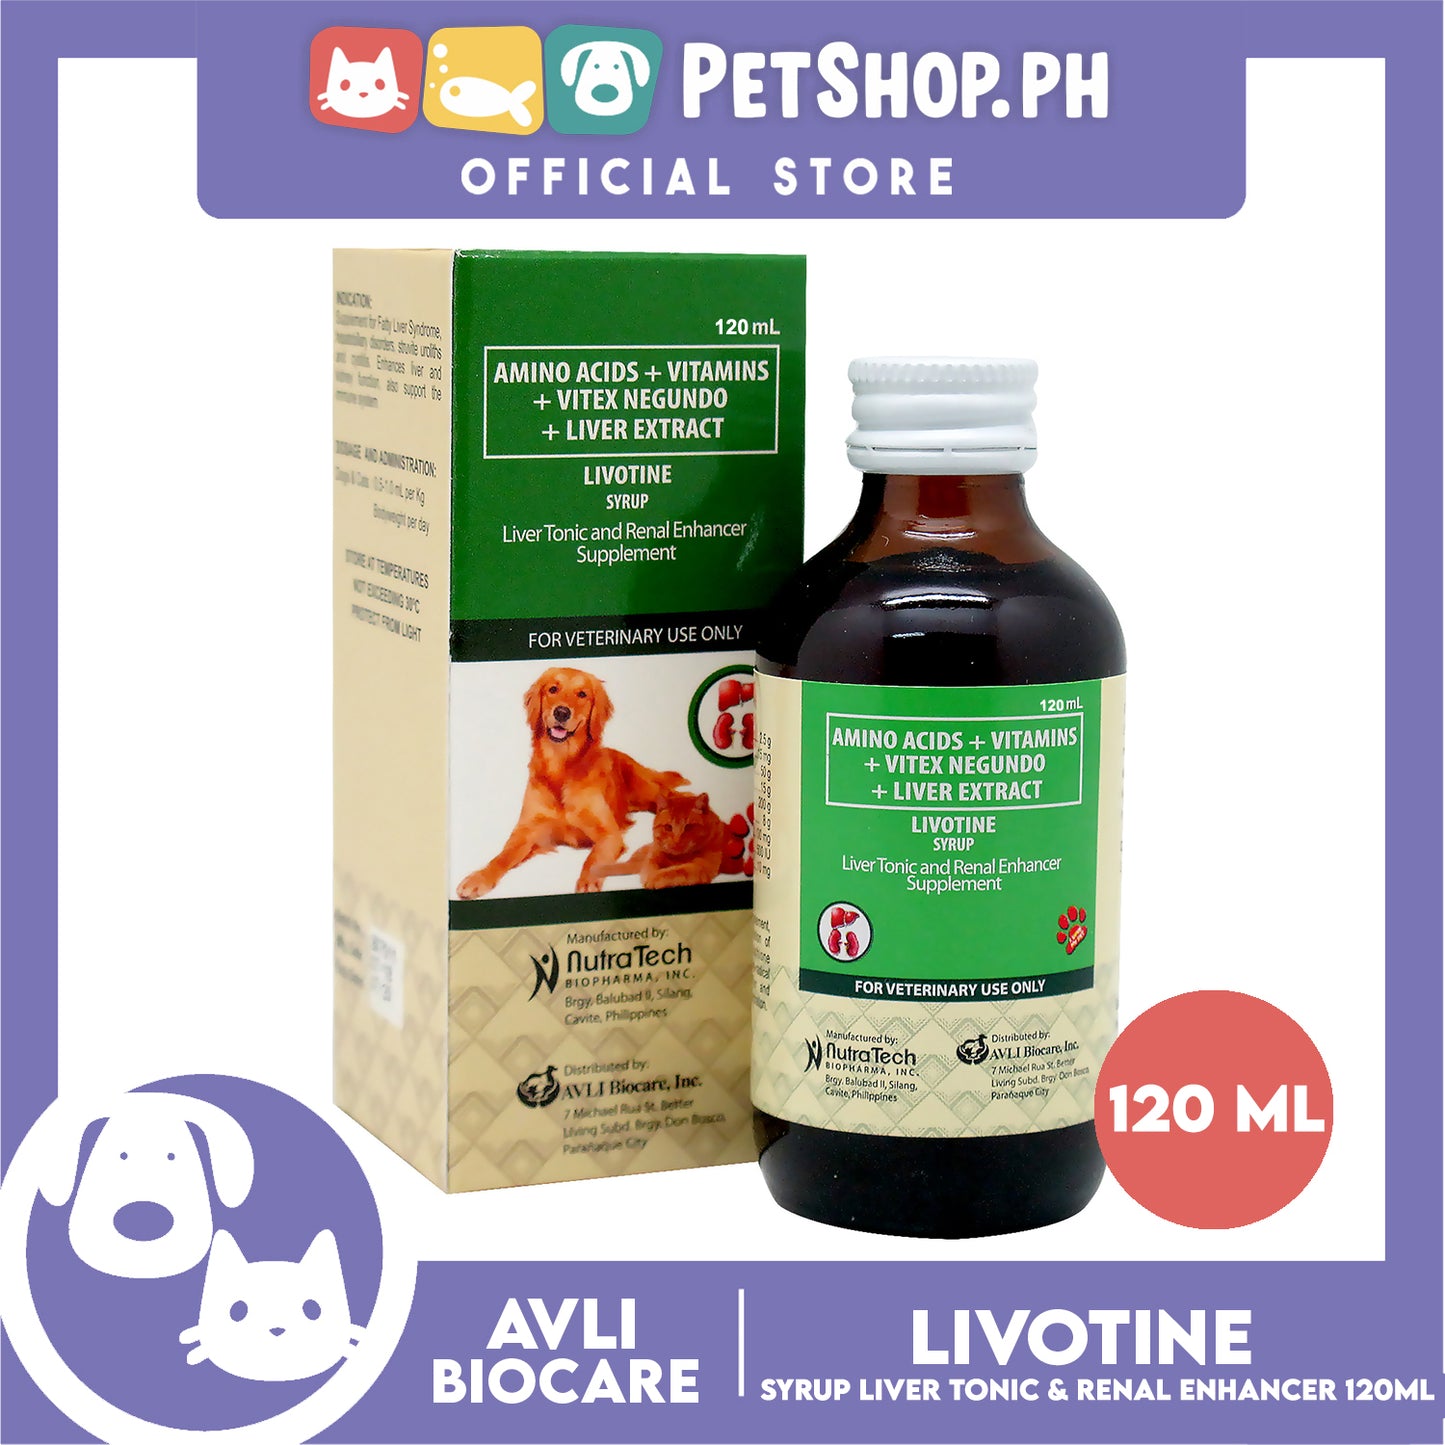 NutraTech Amino Acids + Vitamins + Vitex Negundo + Liver Extract Livotine Syrup 120ml